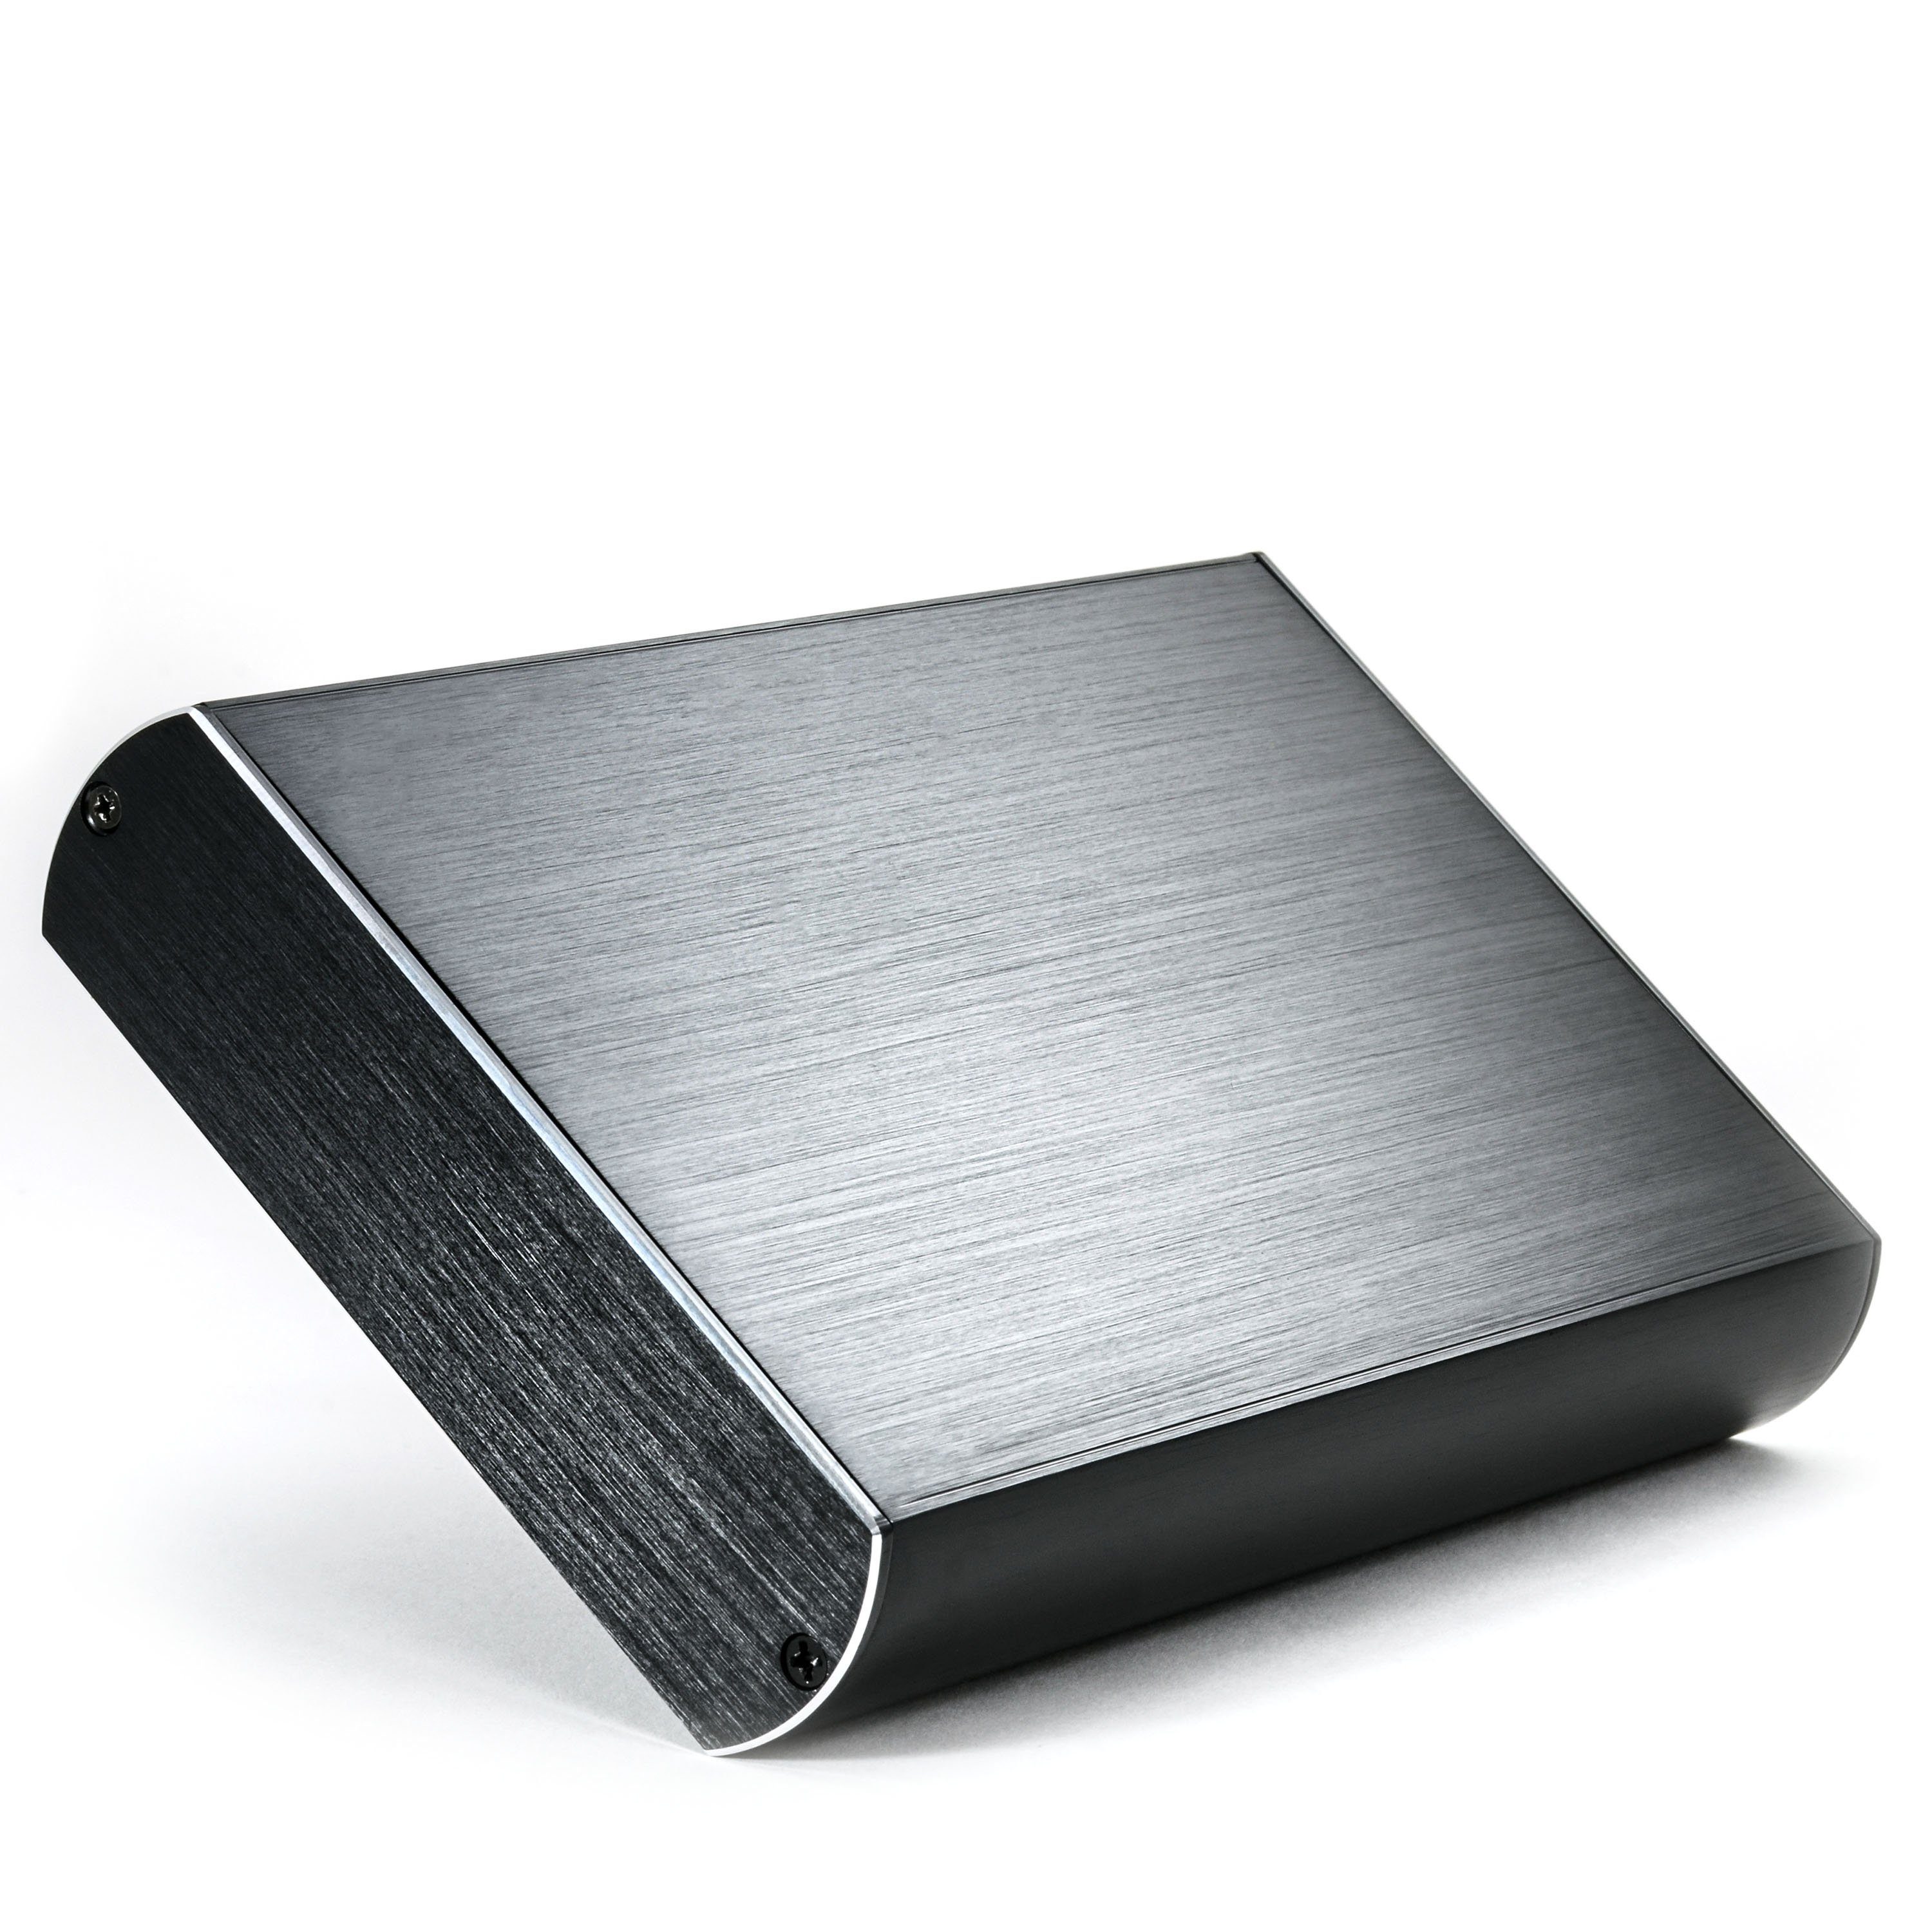 CSL Festplatten-Gehäuse, 3,5" USB 3.0 Aluminium Festplatten-Gehäuse SATA  I/II/III und SSD-fähig online kaufen | OTTO